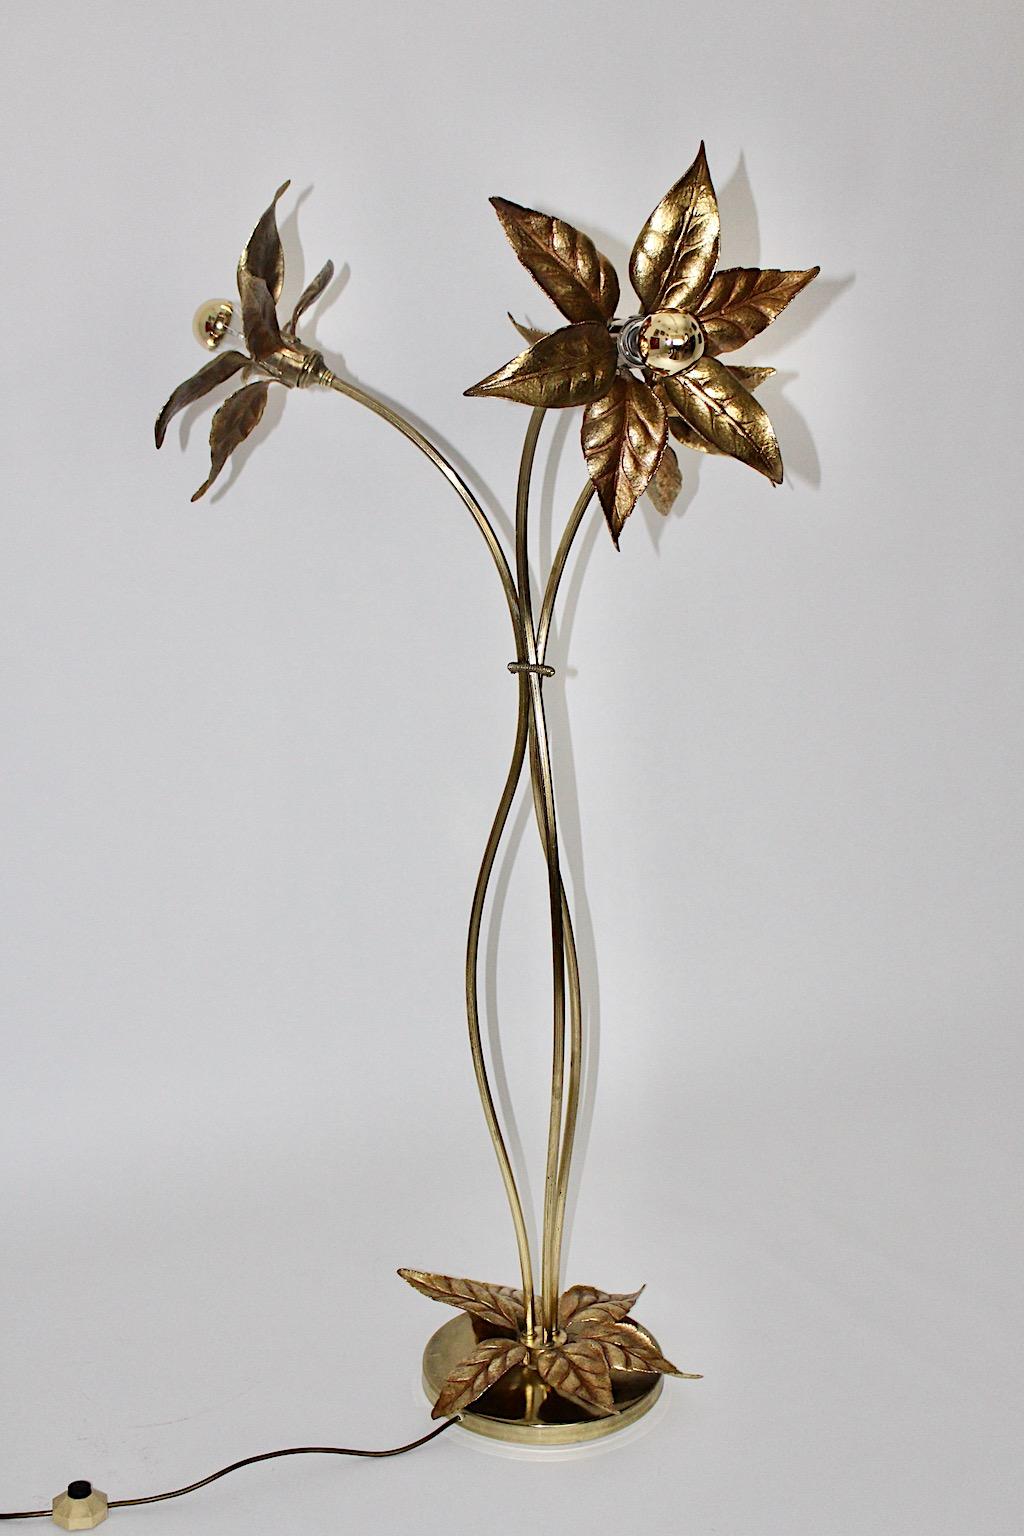 20th Century Modern Willy Daro Vintage Golden Brass Gilt Flower Floor Lamp 1970s Belgium For Sale